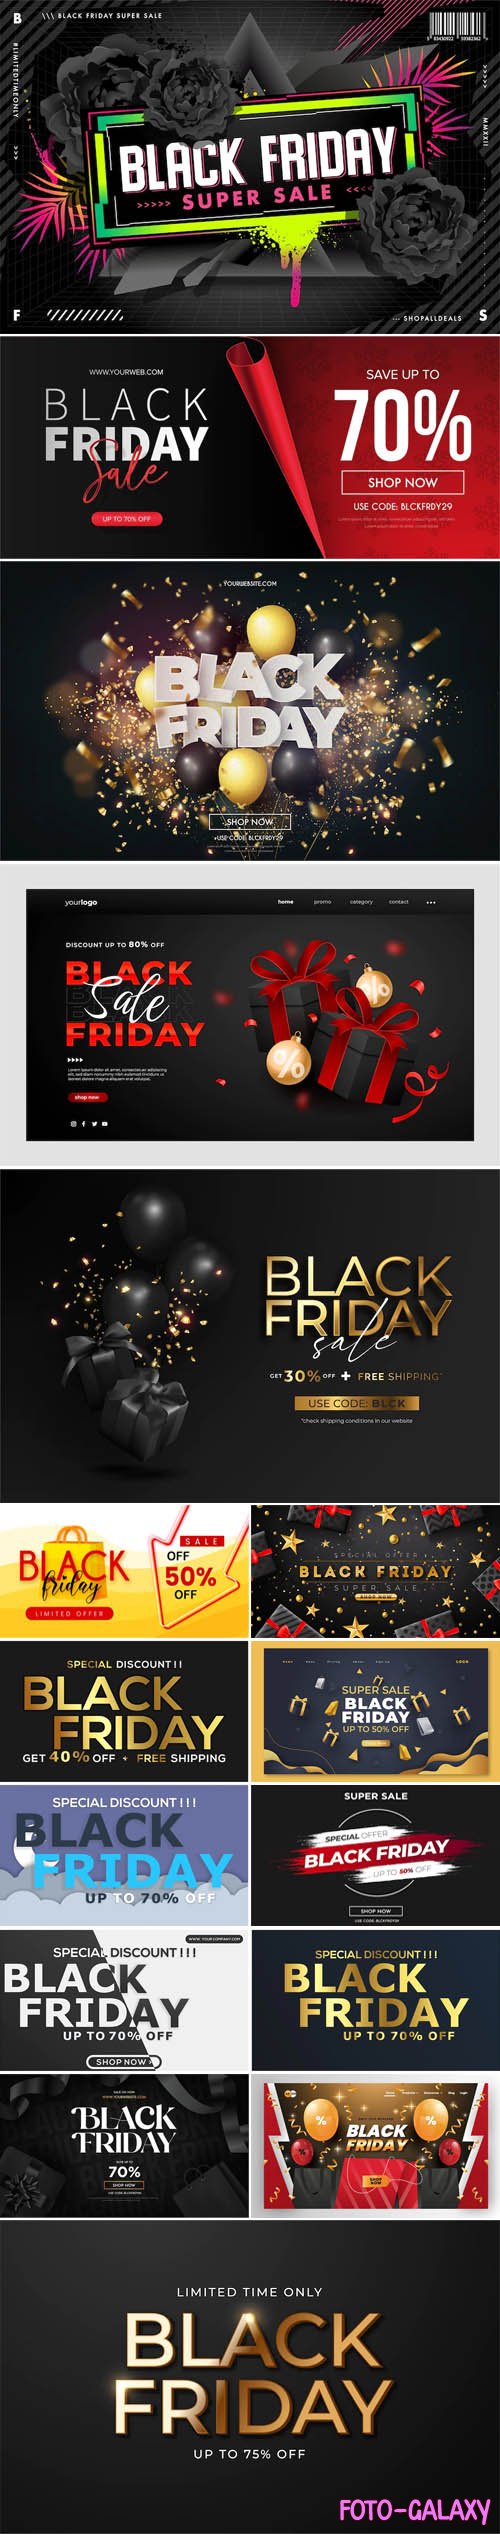 Black Friday Sales - 10+ Modern Web Banners Vector Templates [Vol.1]